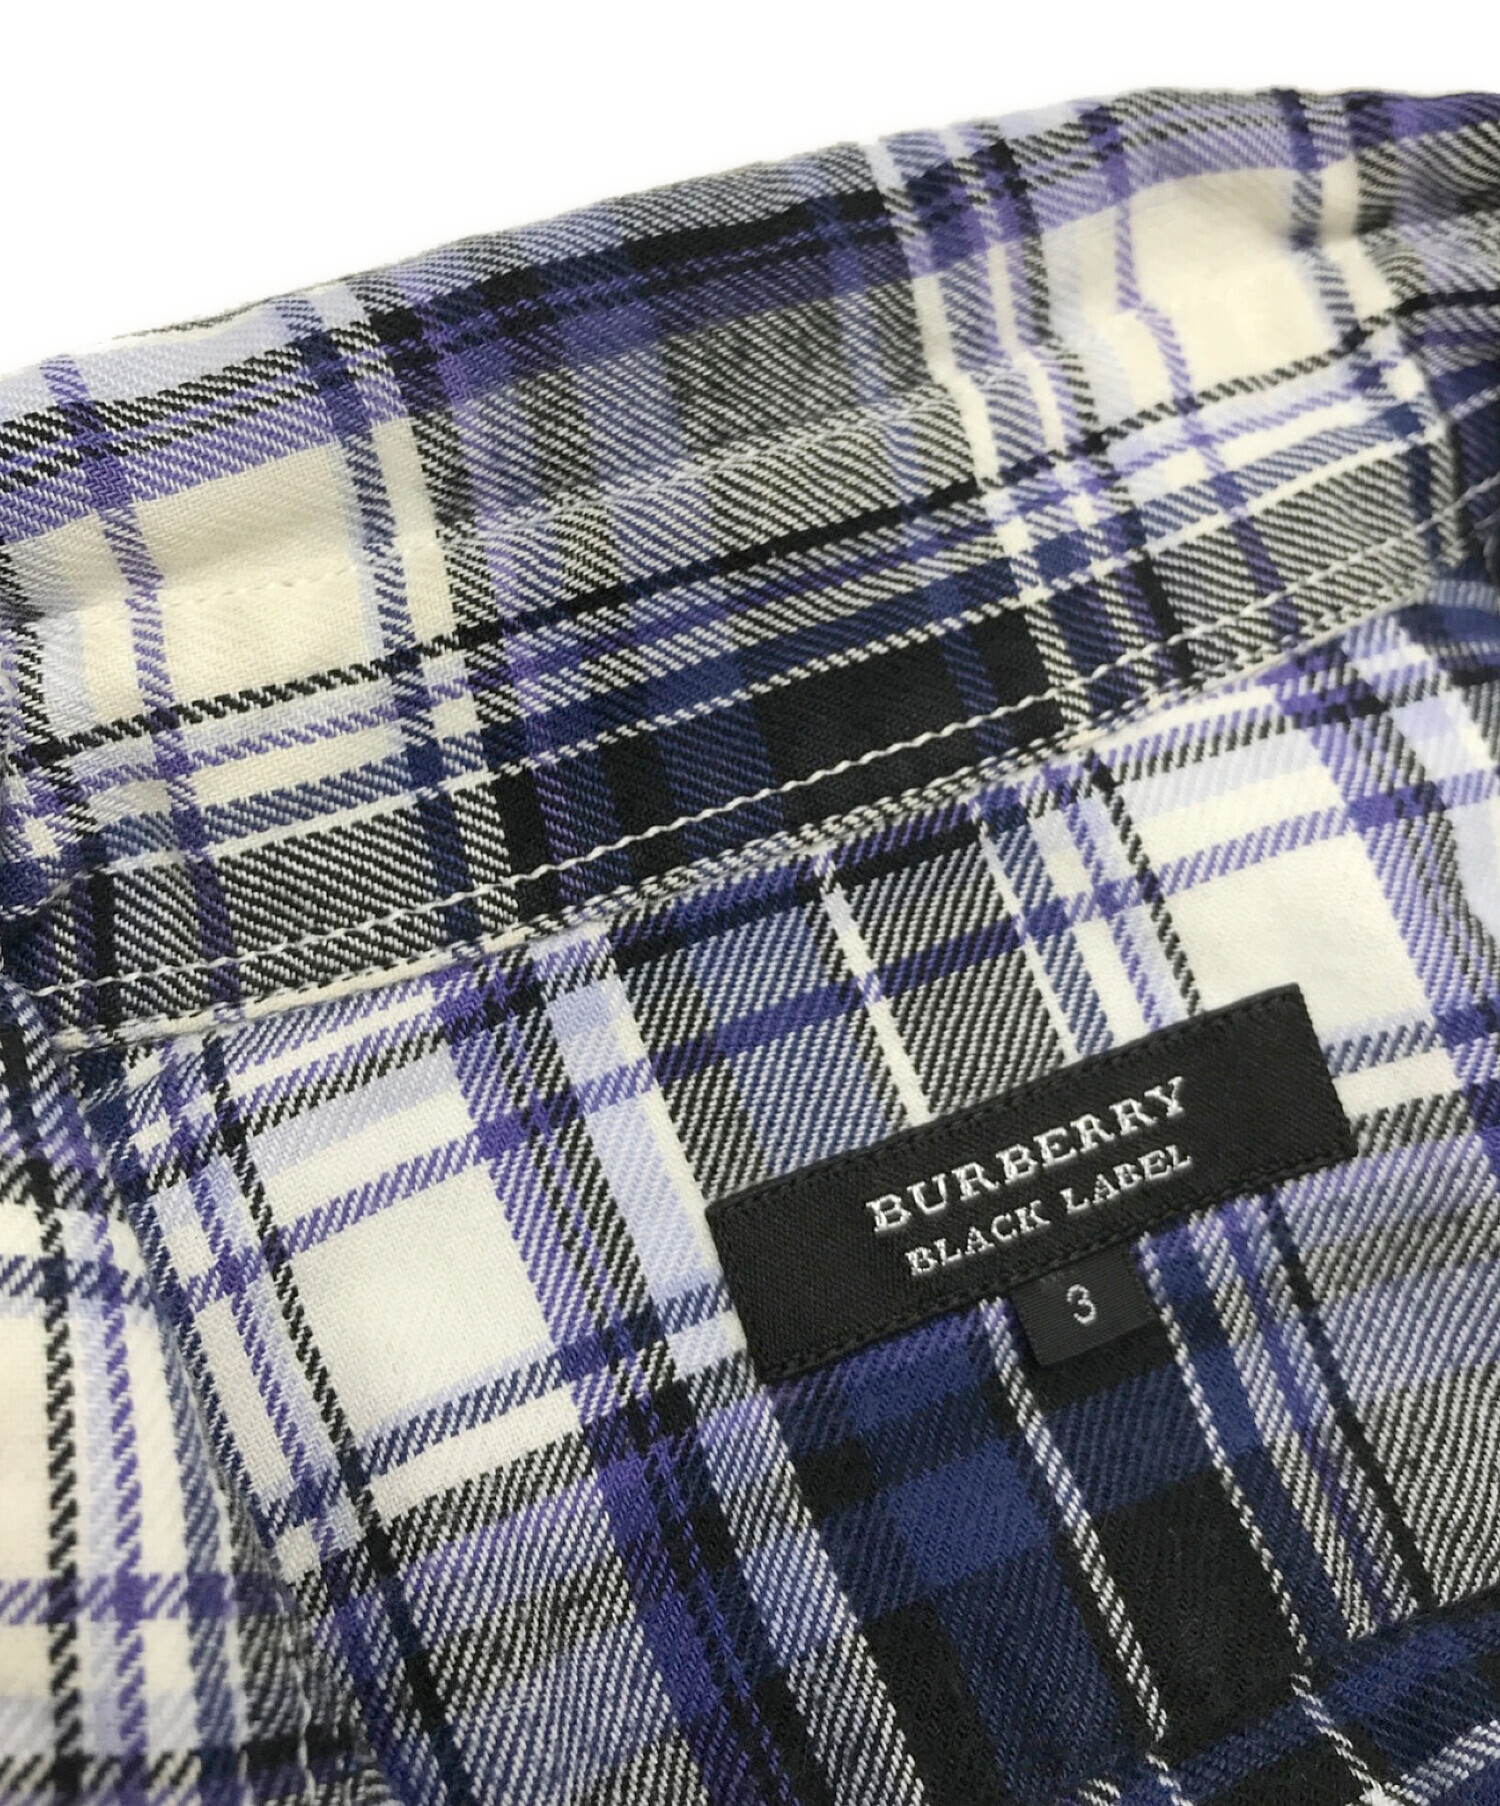 BURBERRY BLACK LABEL (バーバリーブラックレーベル) 裾ロゴチェックネルシャツ ブルー×ホワイト サイズ:3